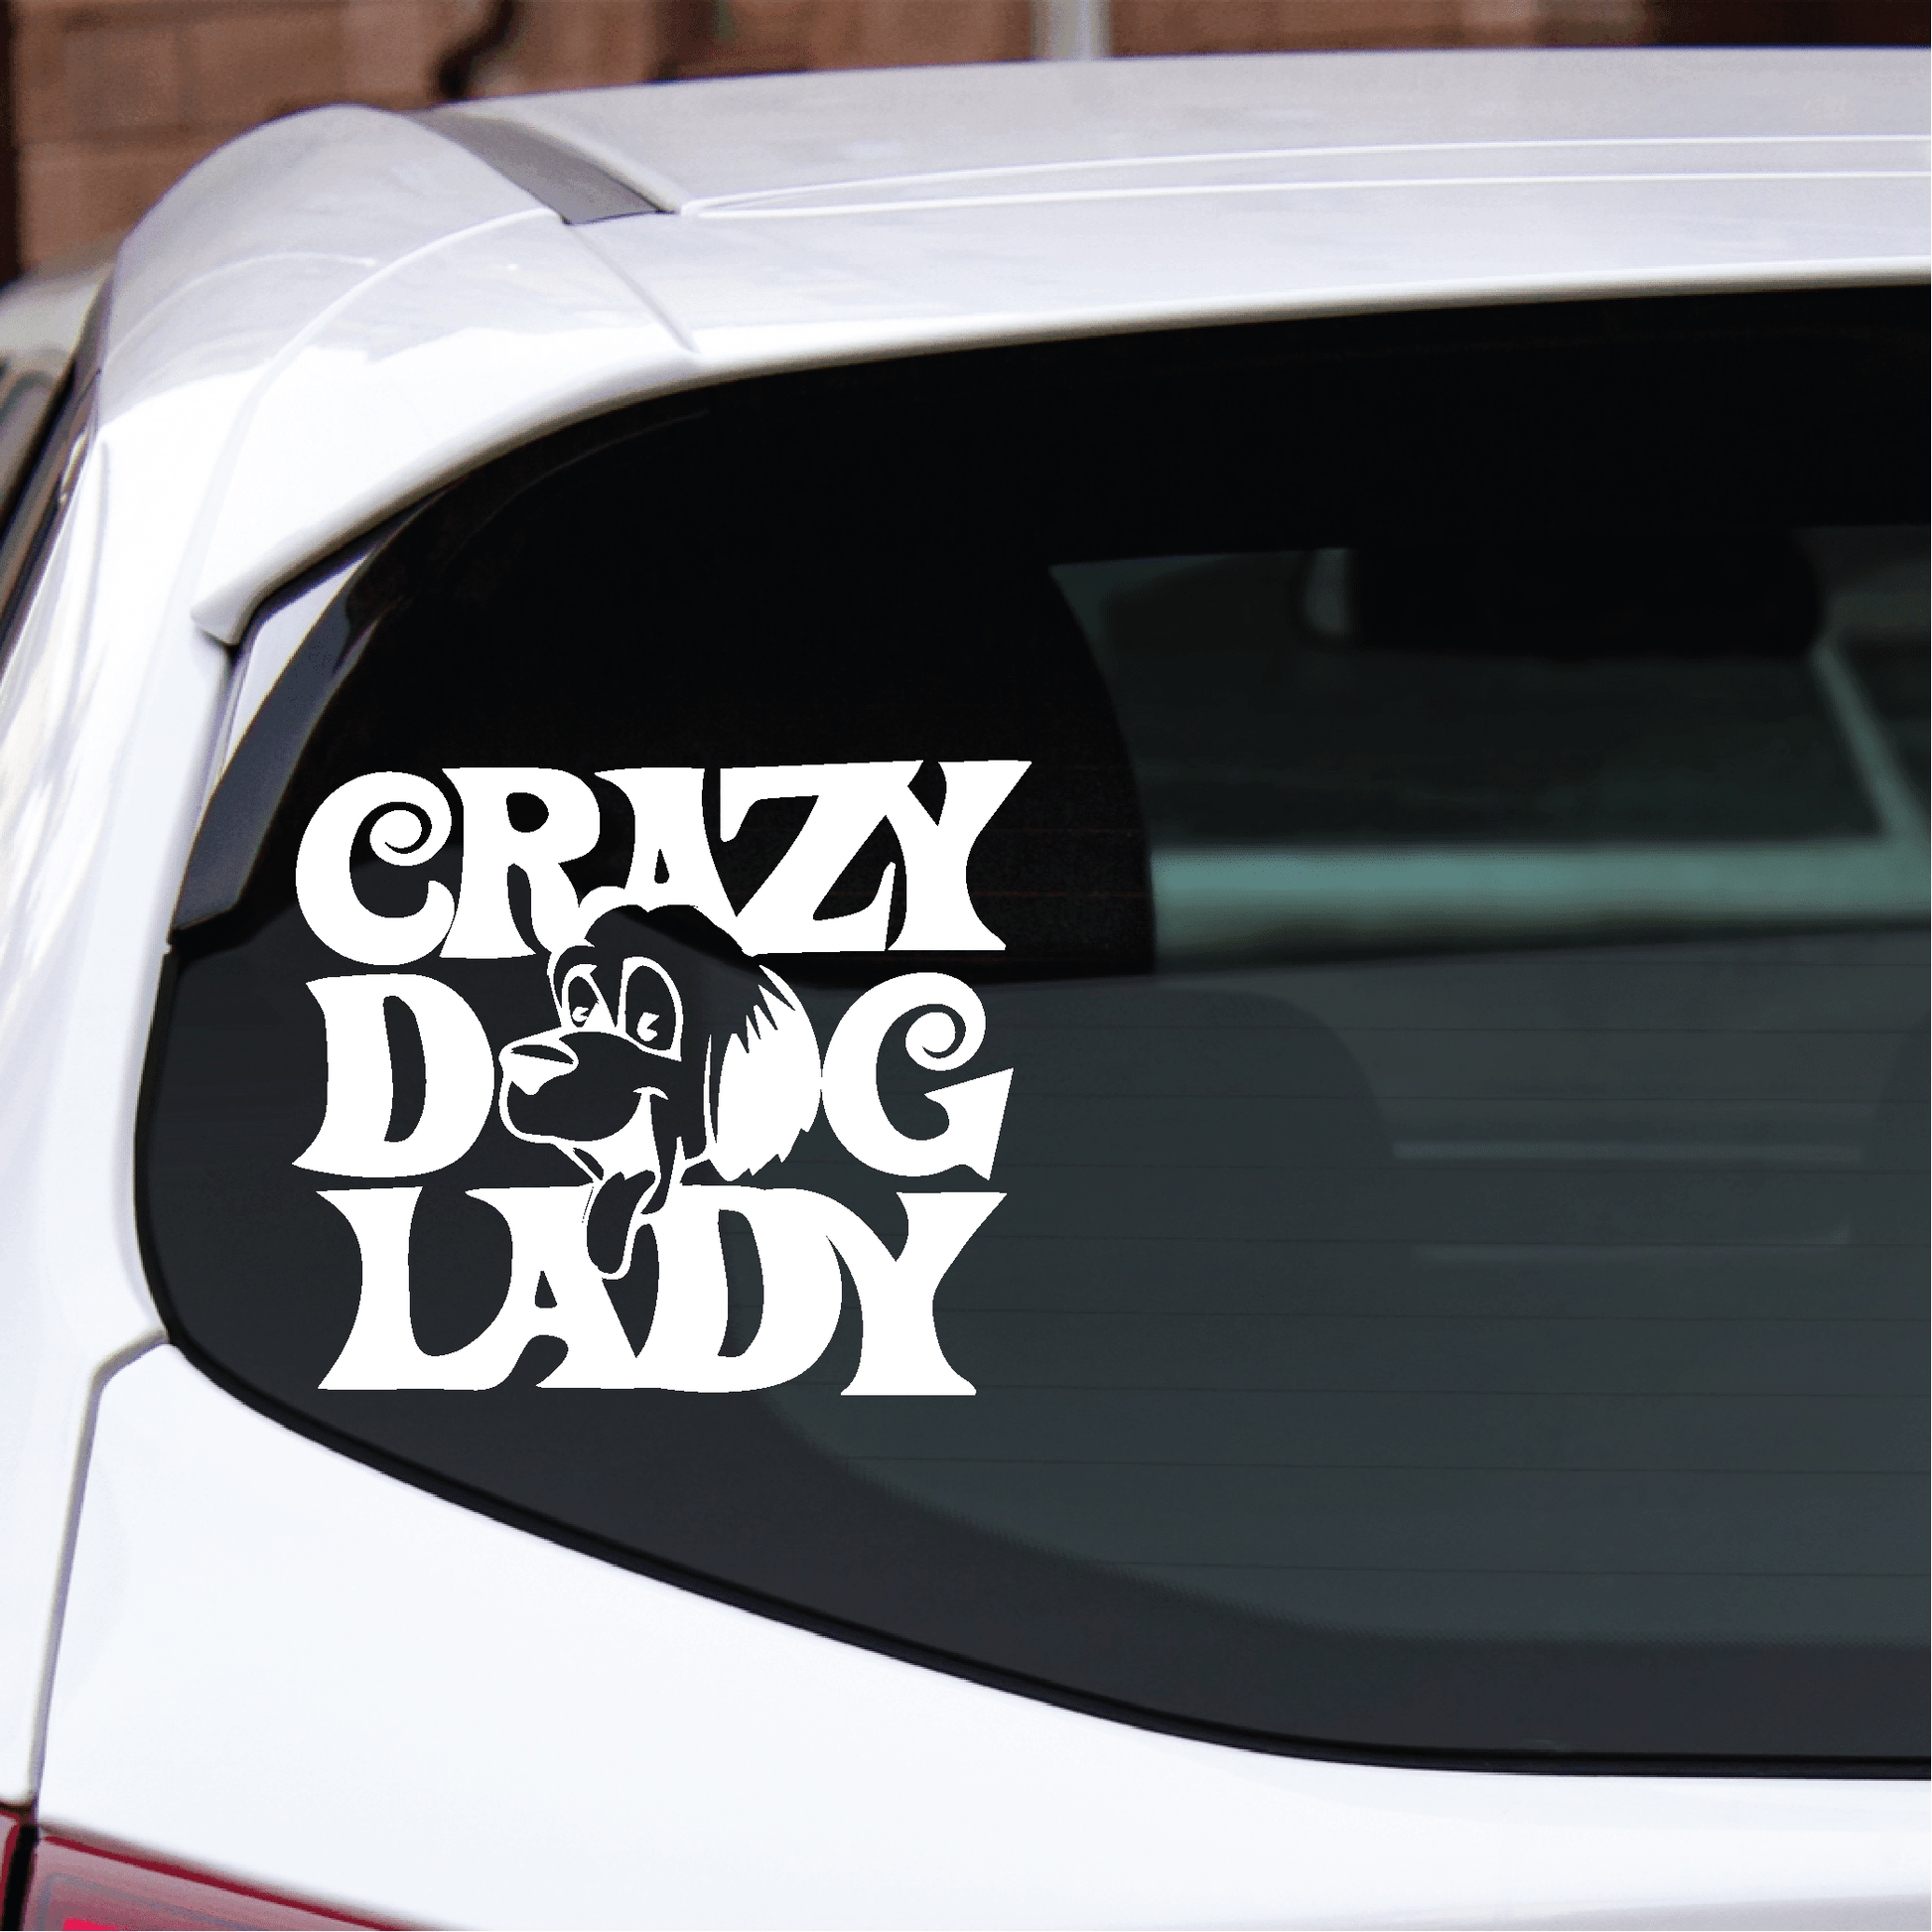 ShopVinylDesignStore.com Crazy Dog Lady Wide Shop Vinyl Design decals stickers